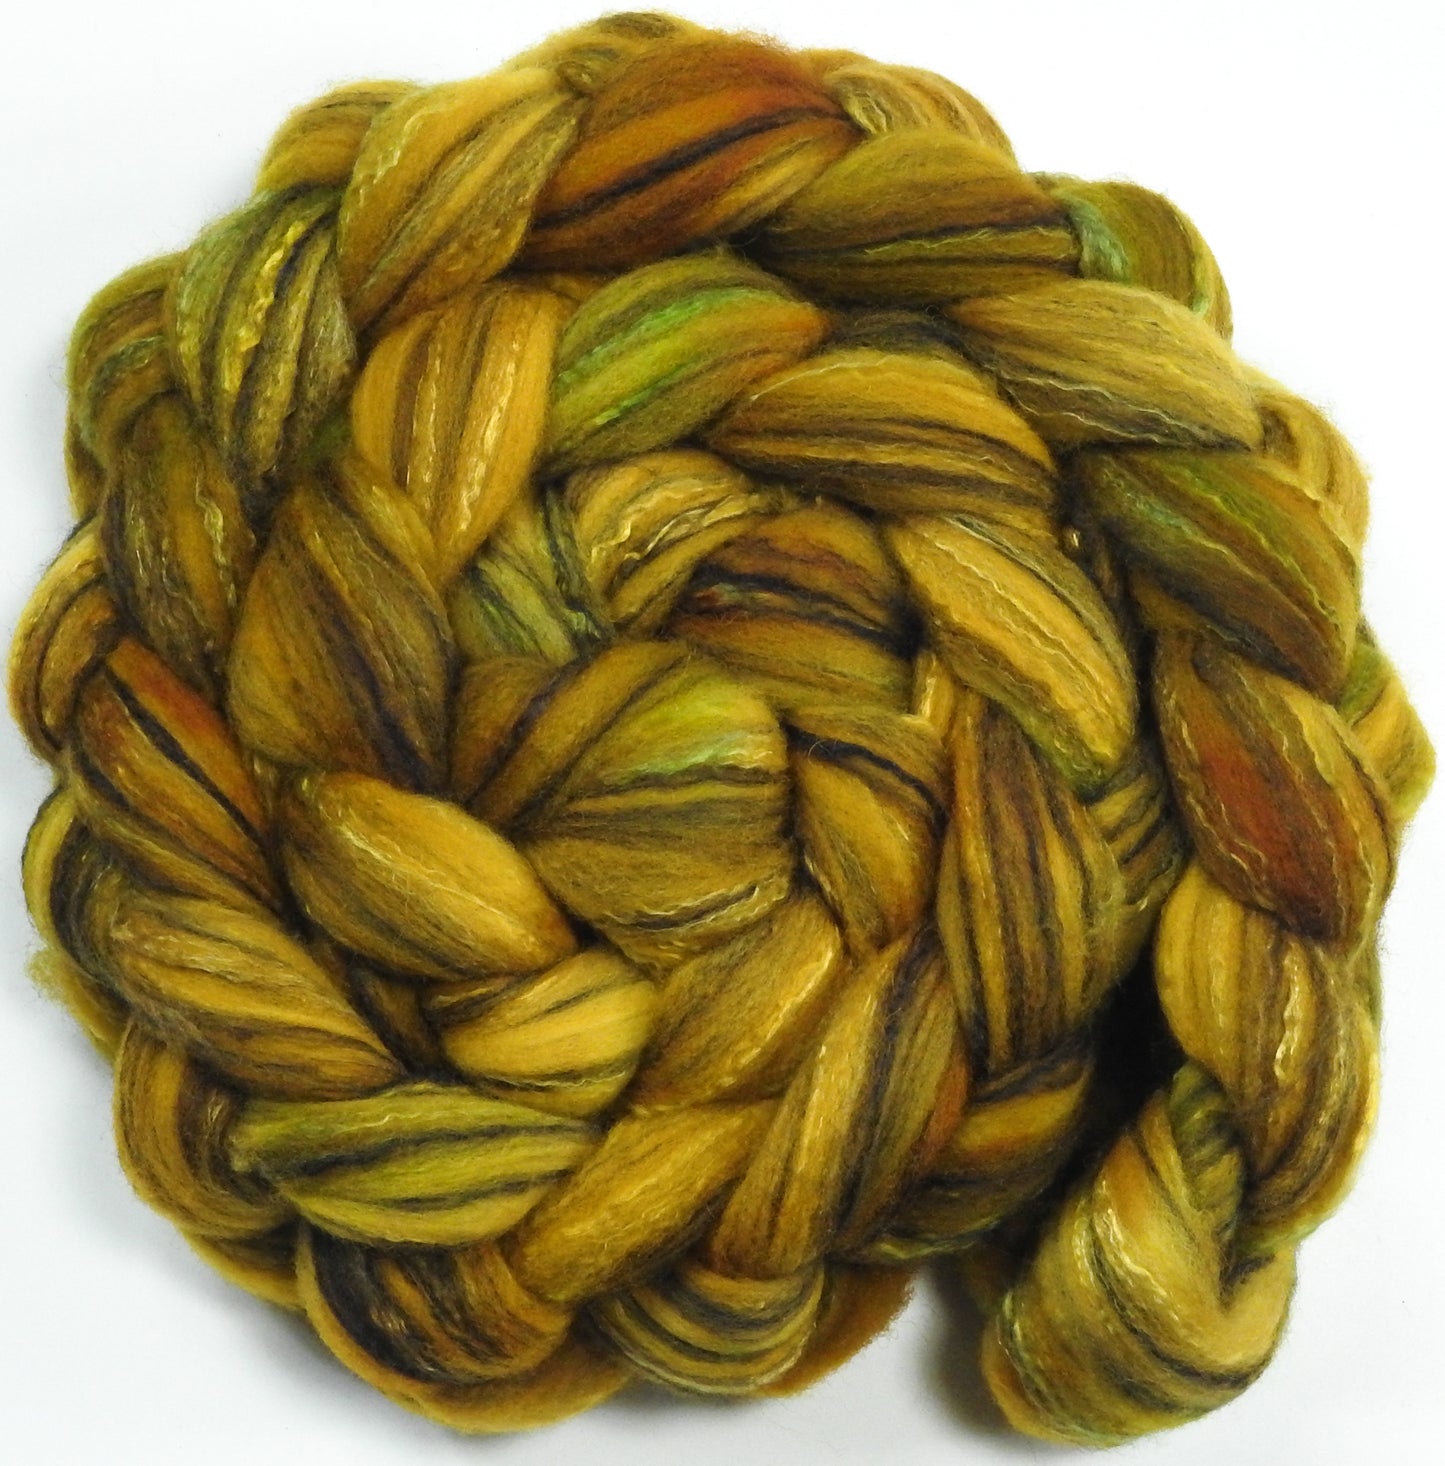 Aspen - Glazed Solid - Batt in a Braid #30- Charollais/ Rambouillet / Black tussah /Mulberry silk (40/40/10/10)